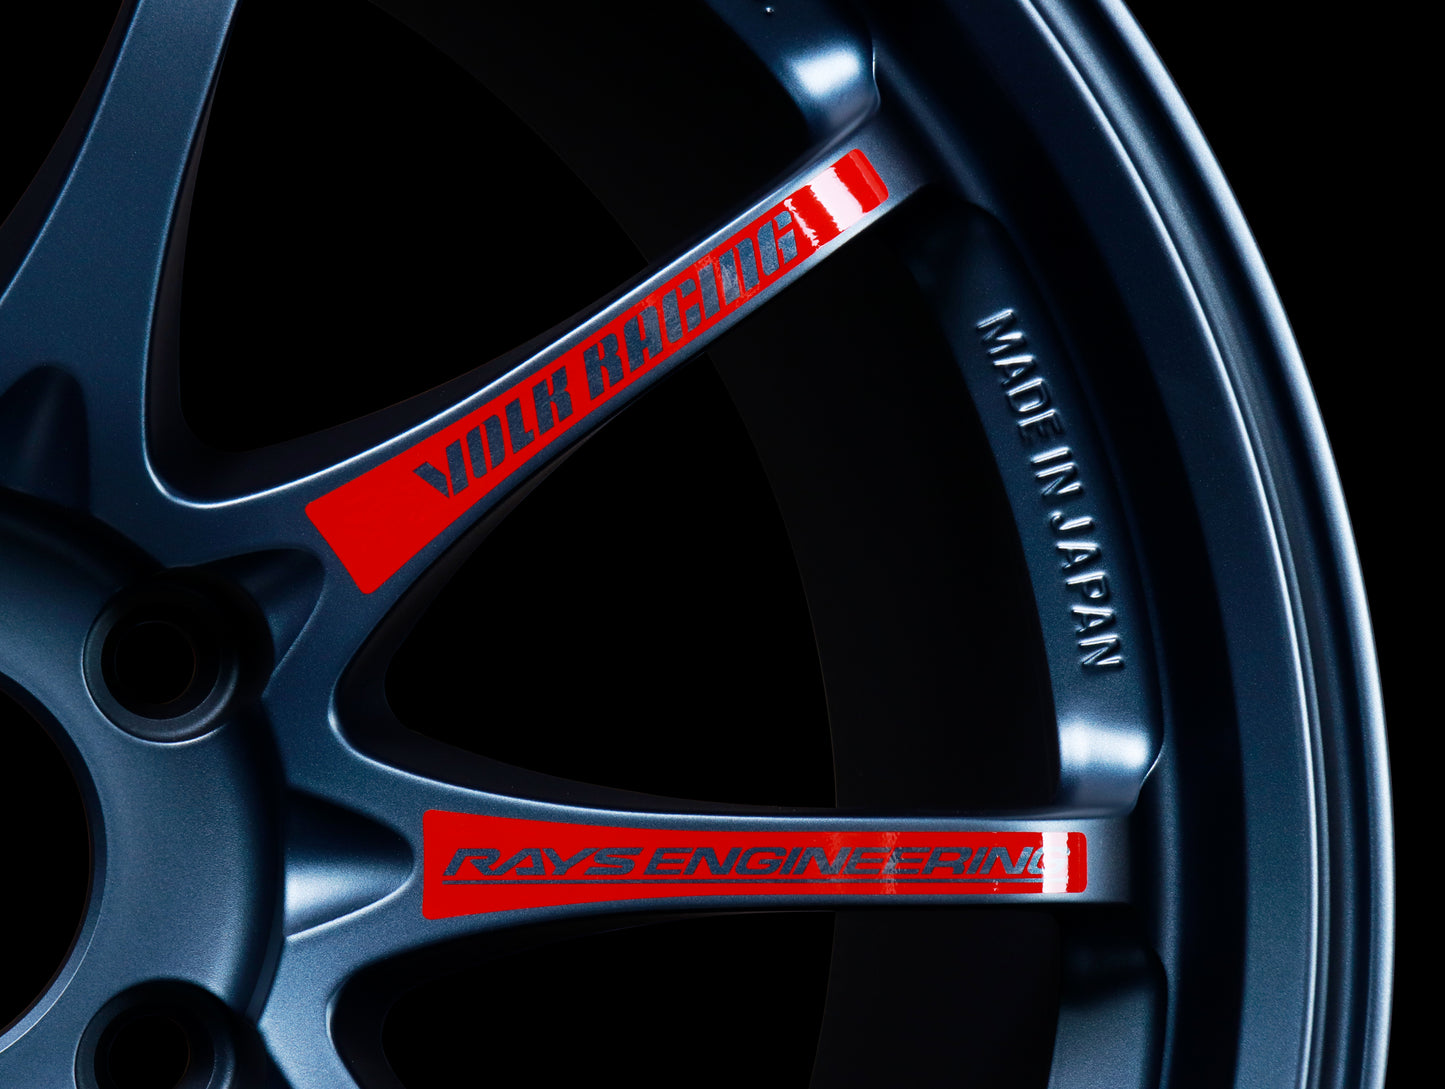 Volk Racing CE28SL Wheels - Matte Blue Gunmetal - 18x9.5 / 5x120 / +35